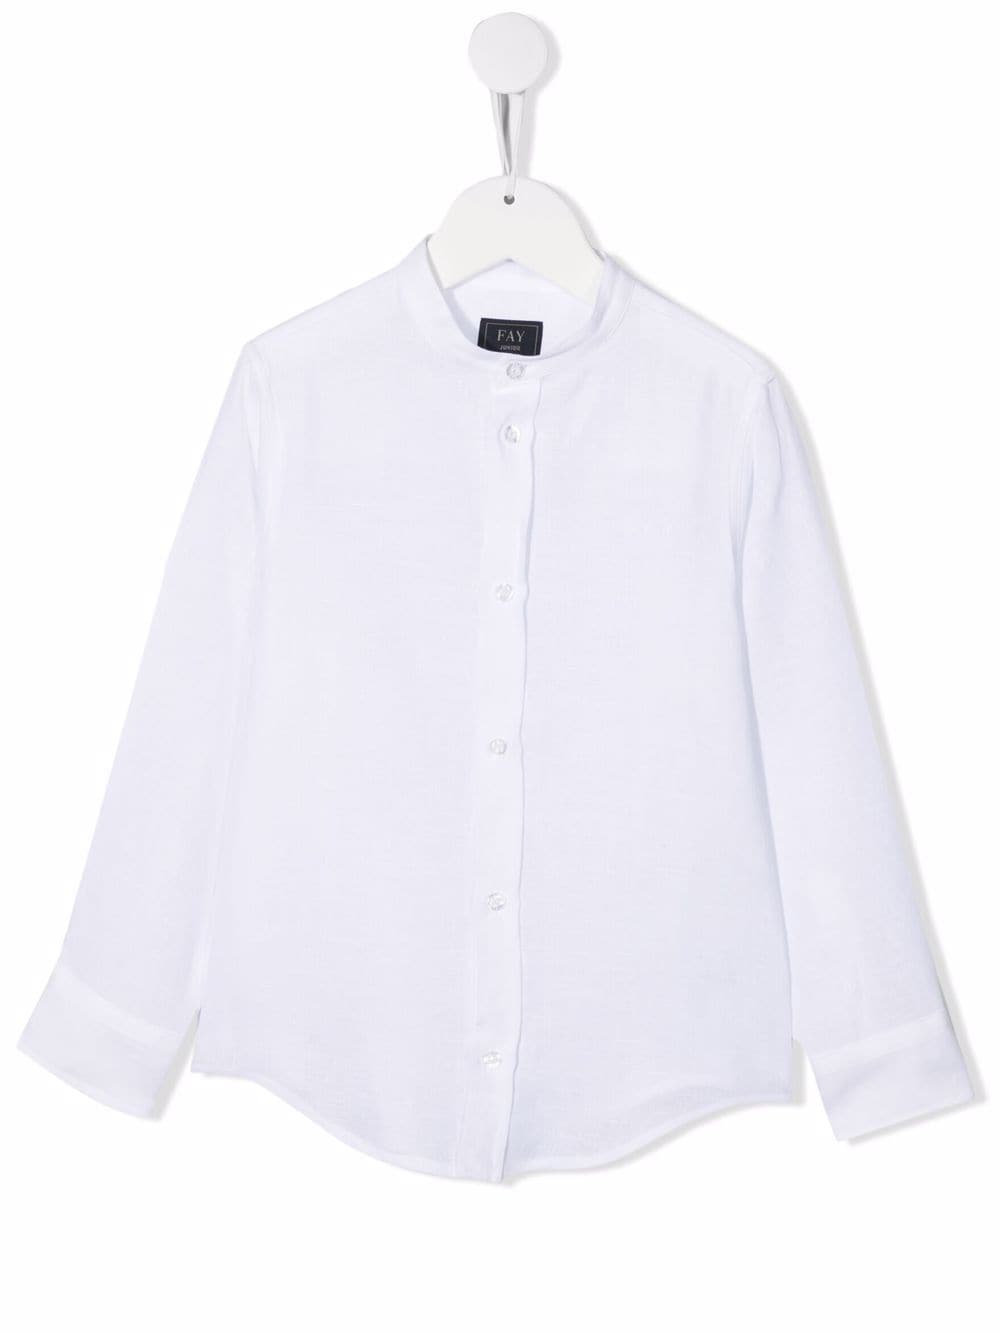 Fay Kids collarless buttoned shirt - White von Fay Kids